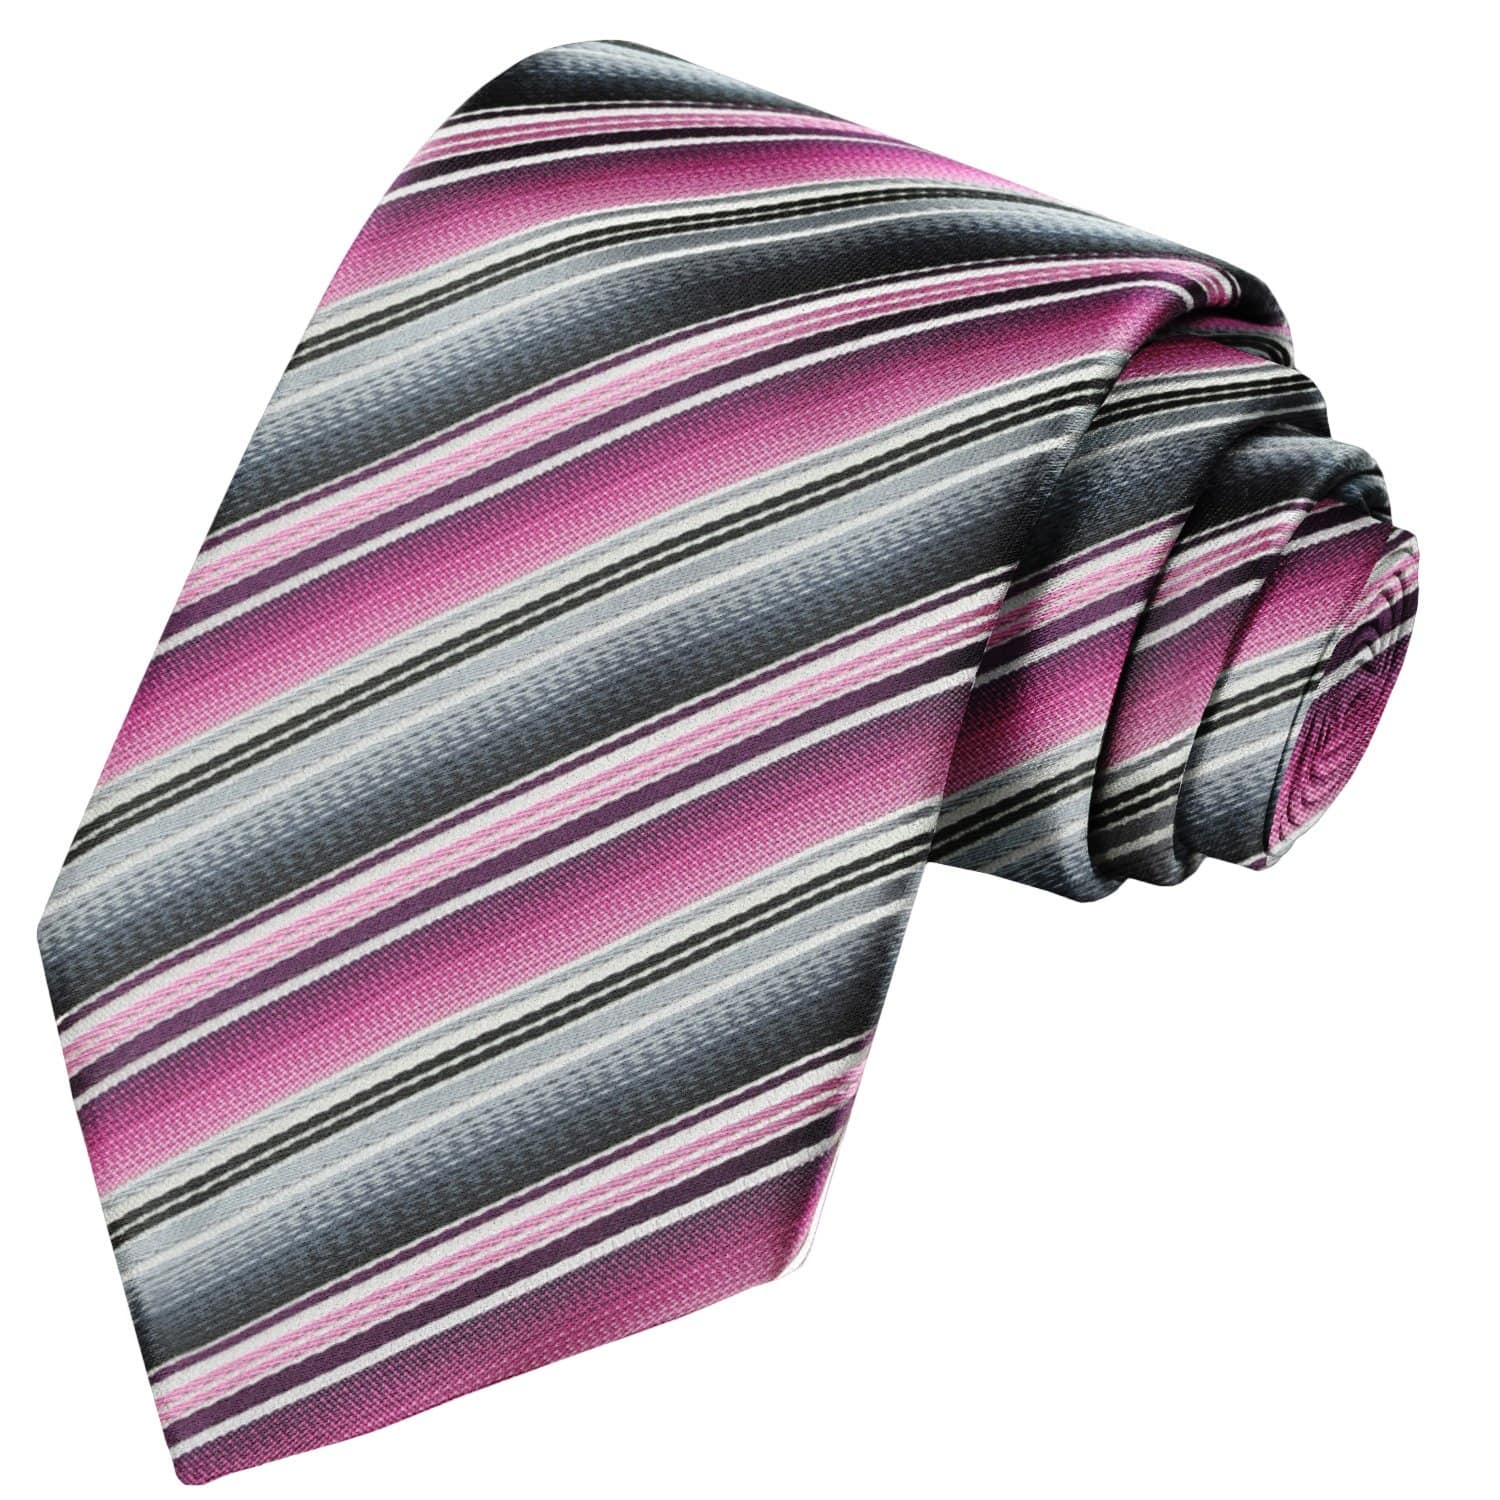 Wine Purple-Taffy Pink-Steel-Pewter Gray-Black Striped Tie - Tie, bowtie, pocket square  | Kissties